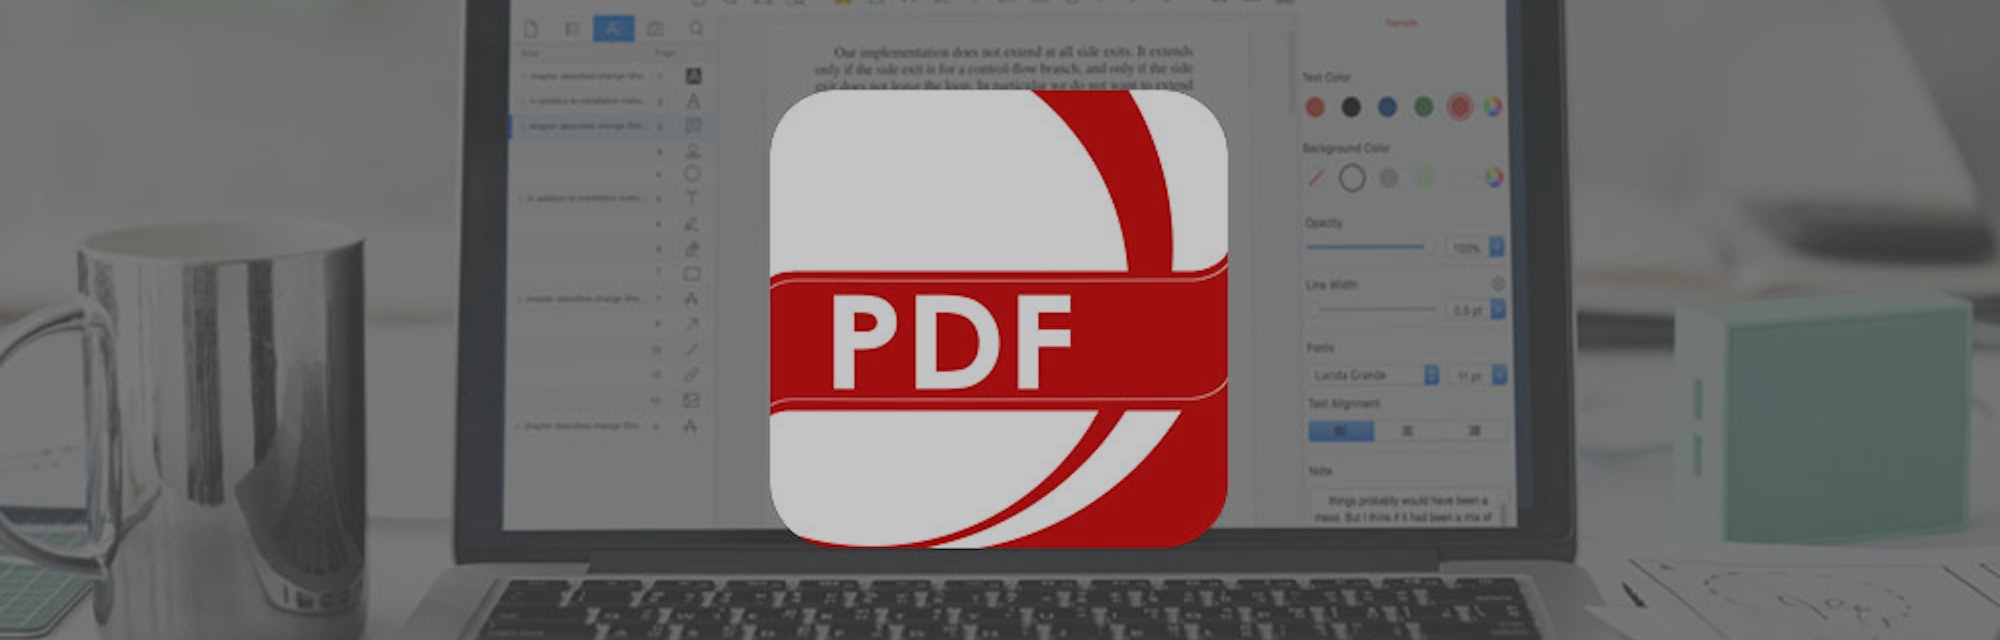 Adobe reader professional free download